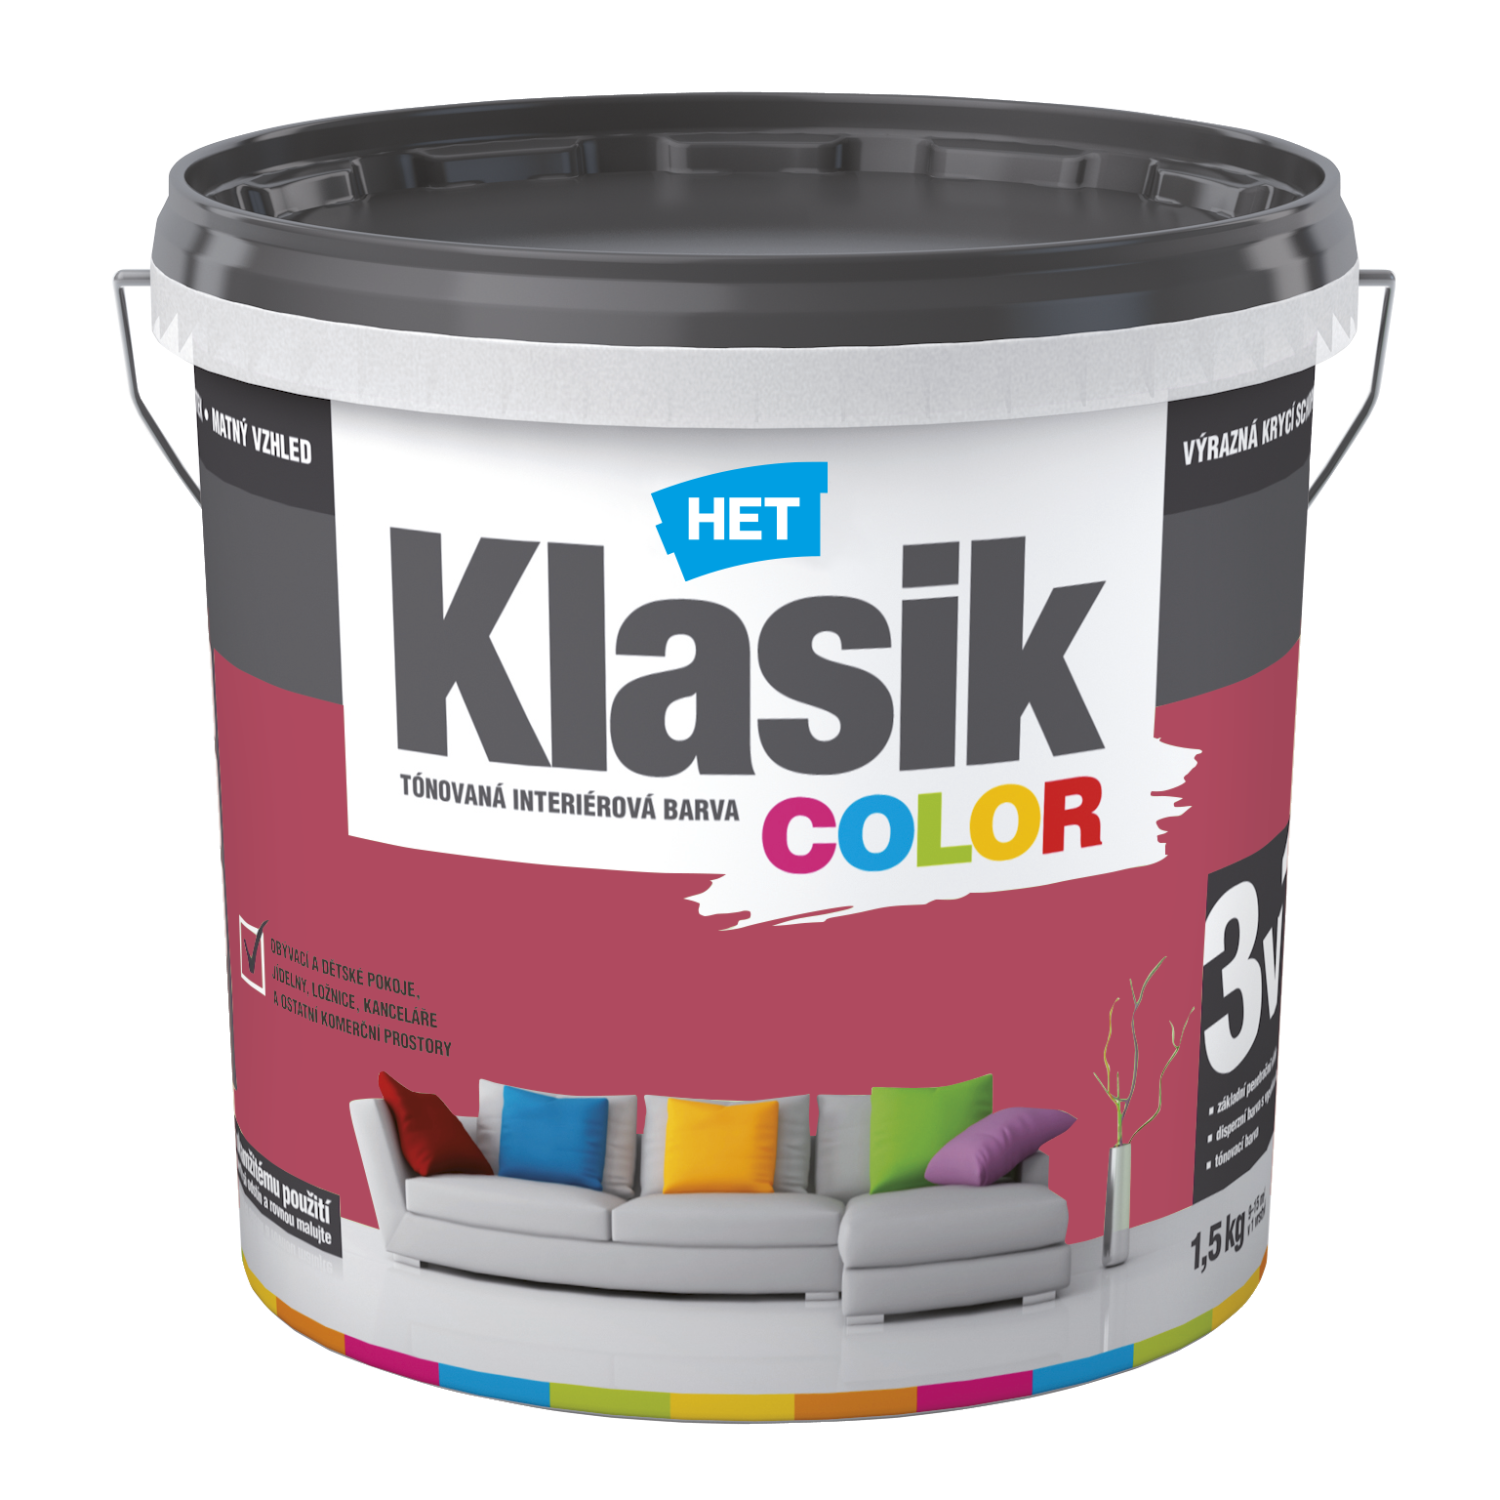 HET Klasik COLOR tónovaná interiérová akrylátová disperzná oteruvzdorná farba 1,5 kg, KC0897 - vínový